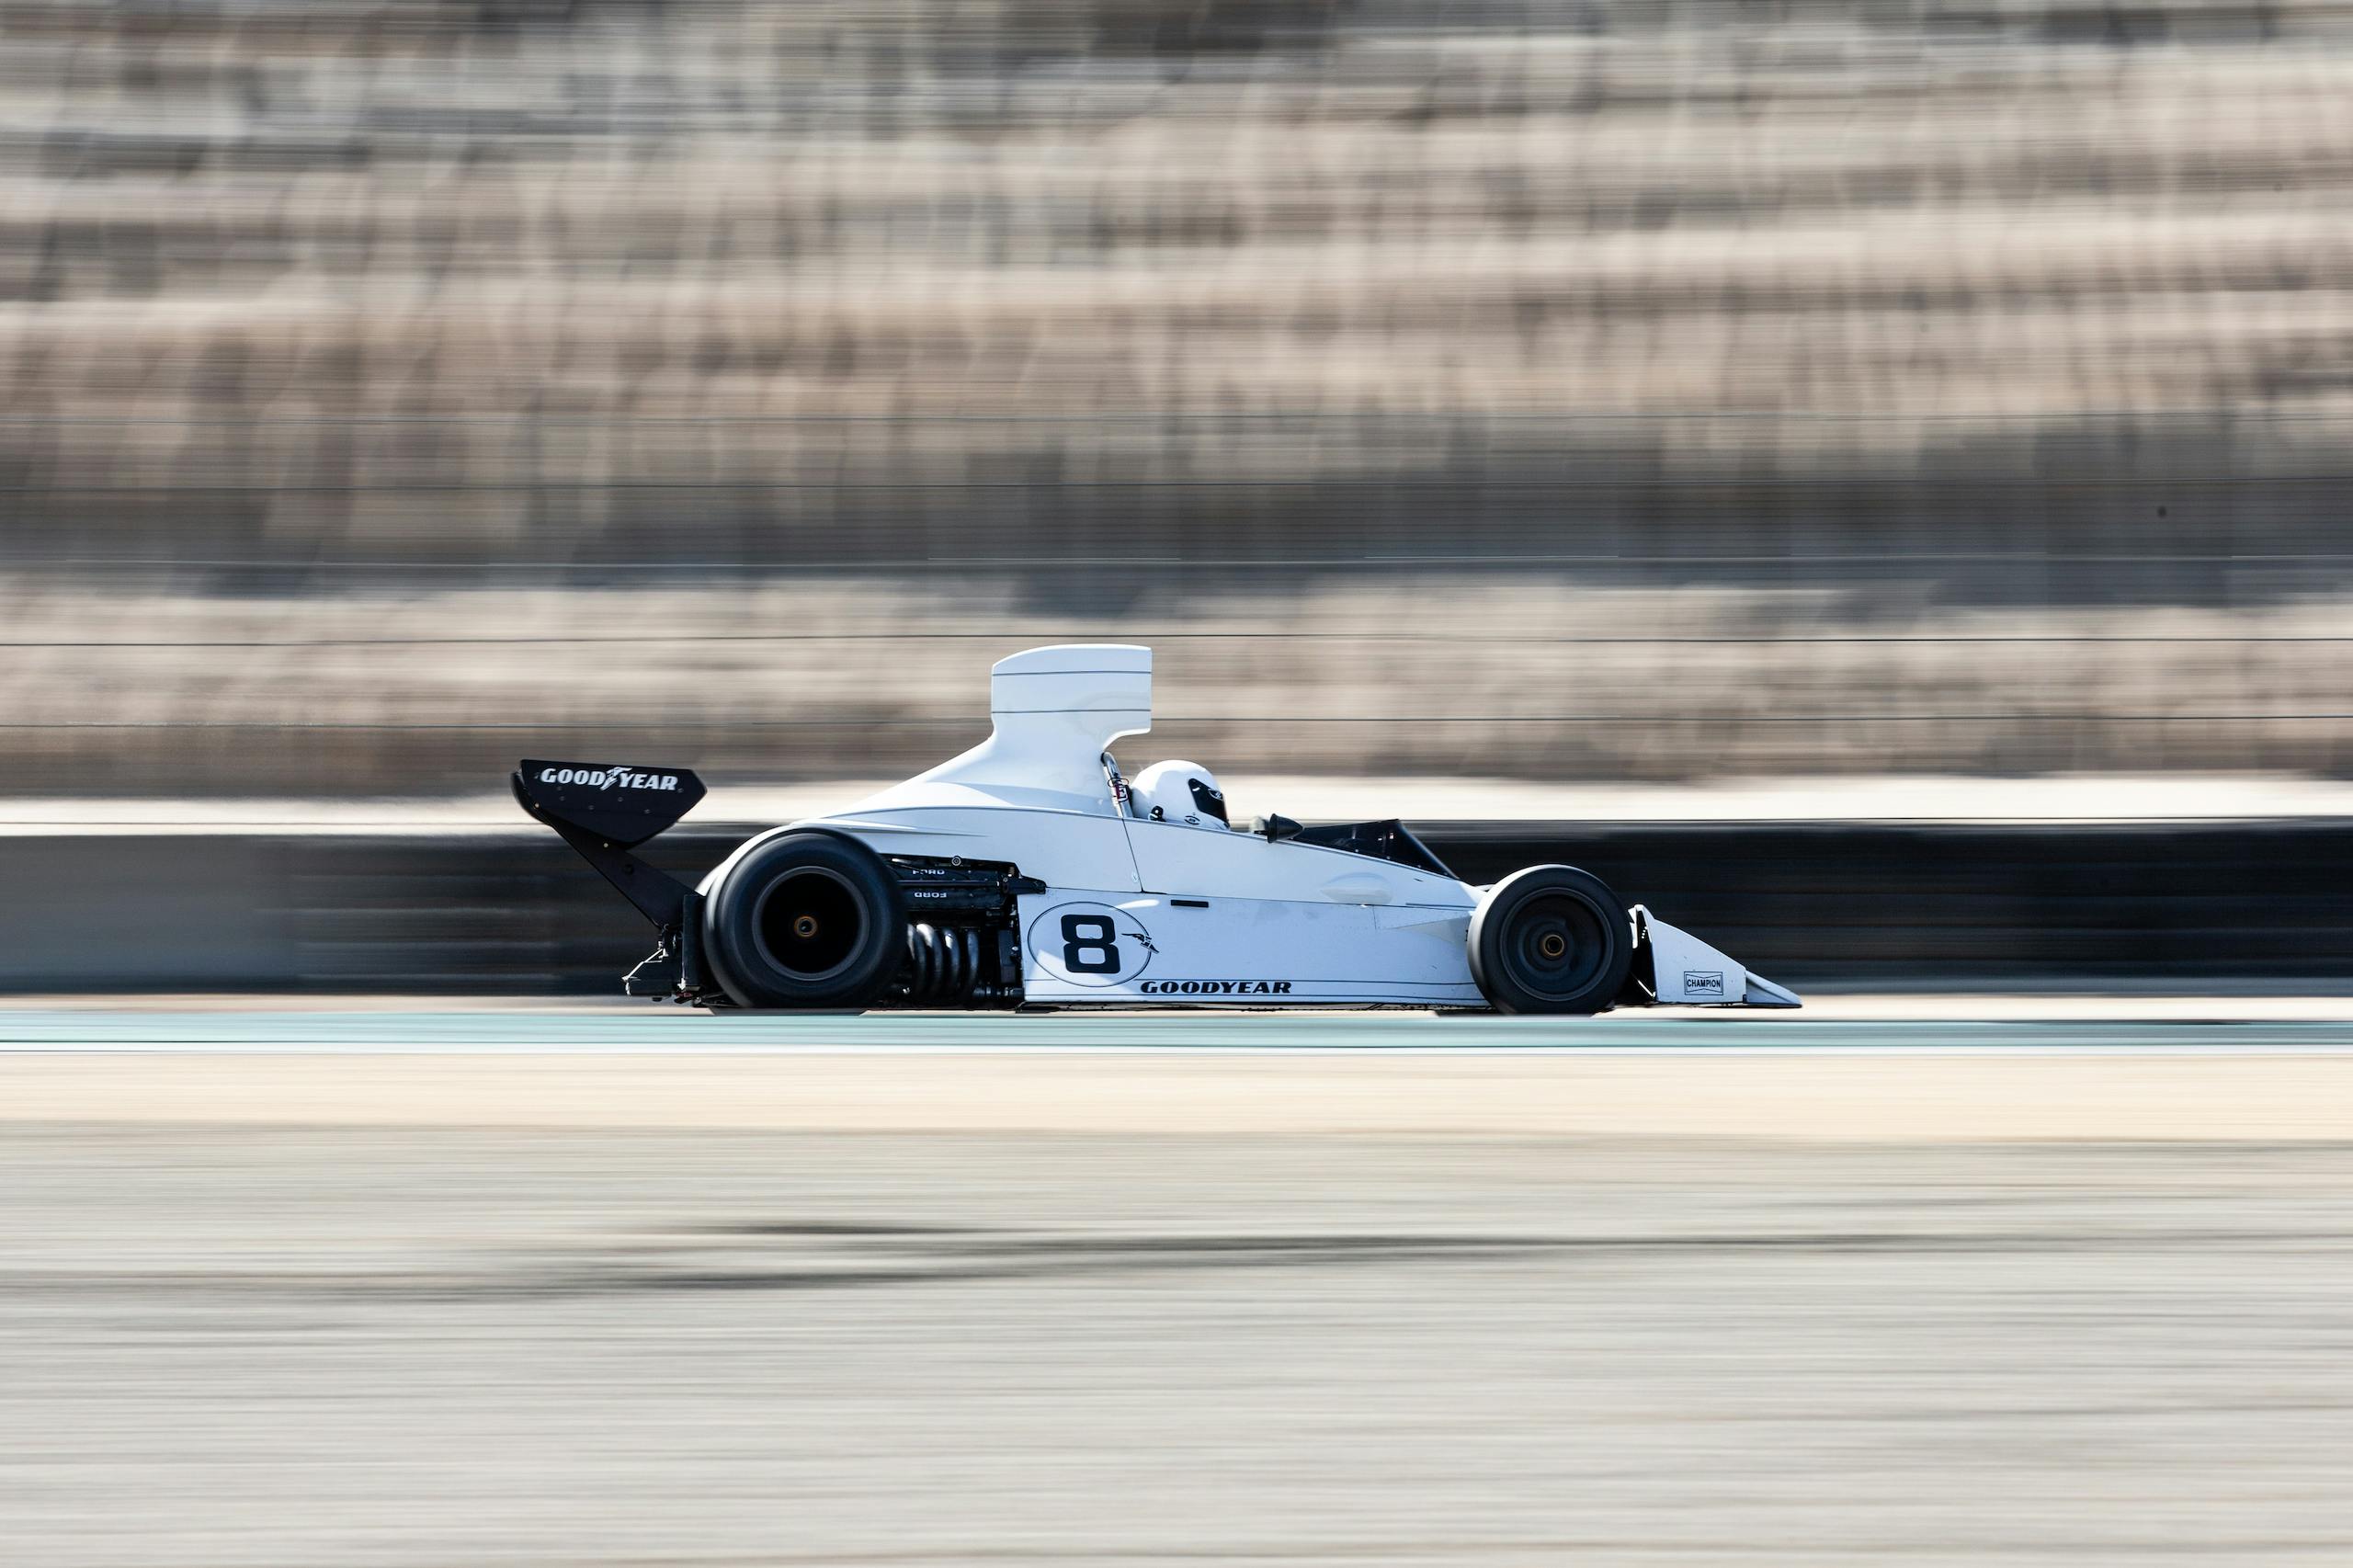 Brabham Monterey action side view